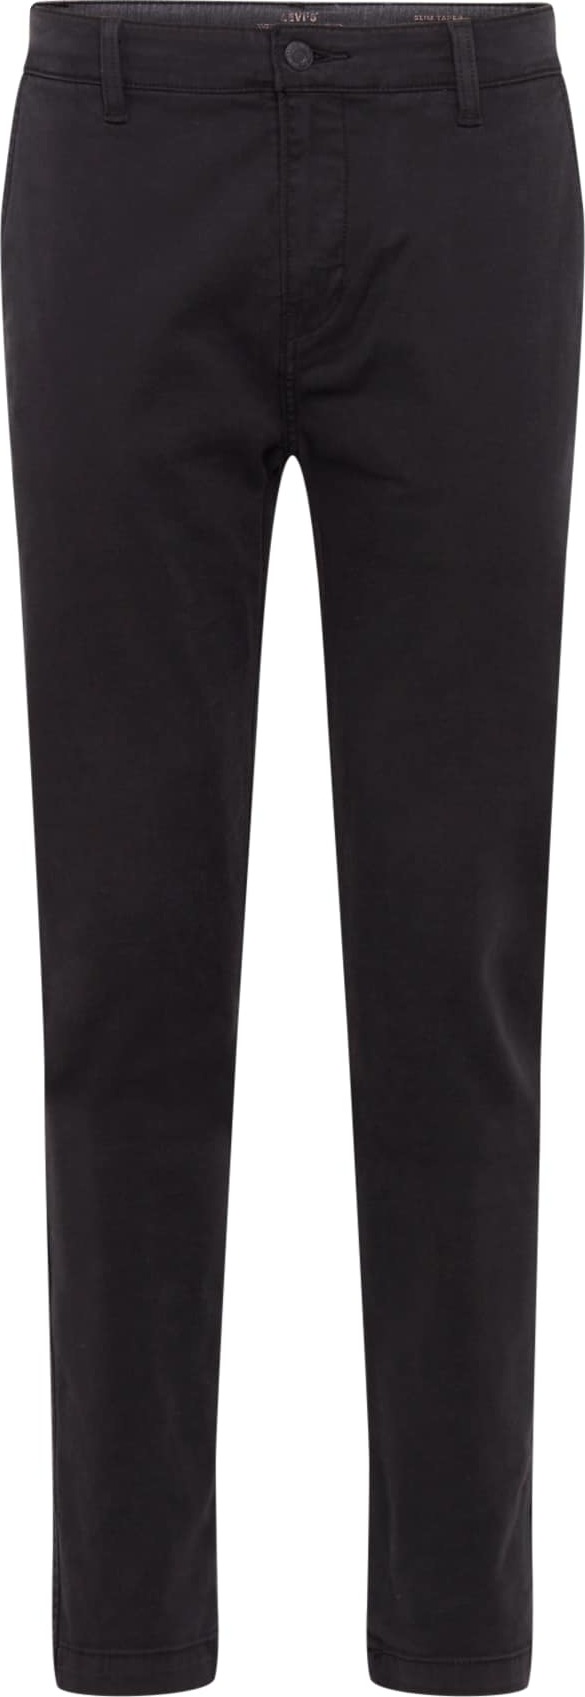 LEVI'S Chino kalhoty 'TAPER CHINO II' černá